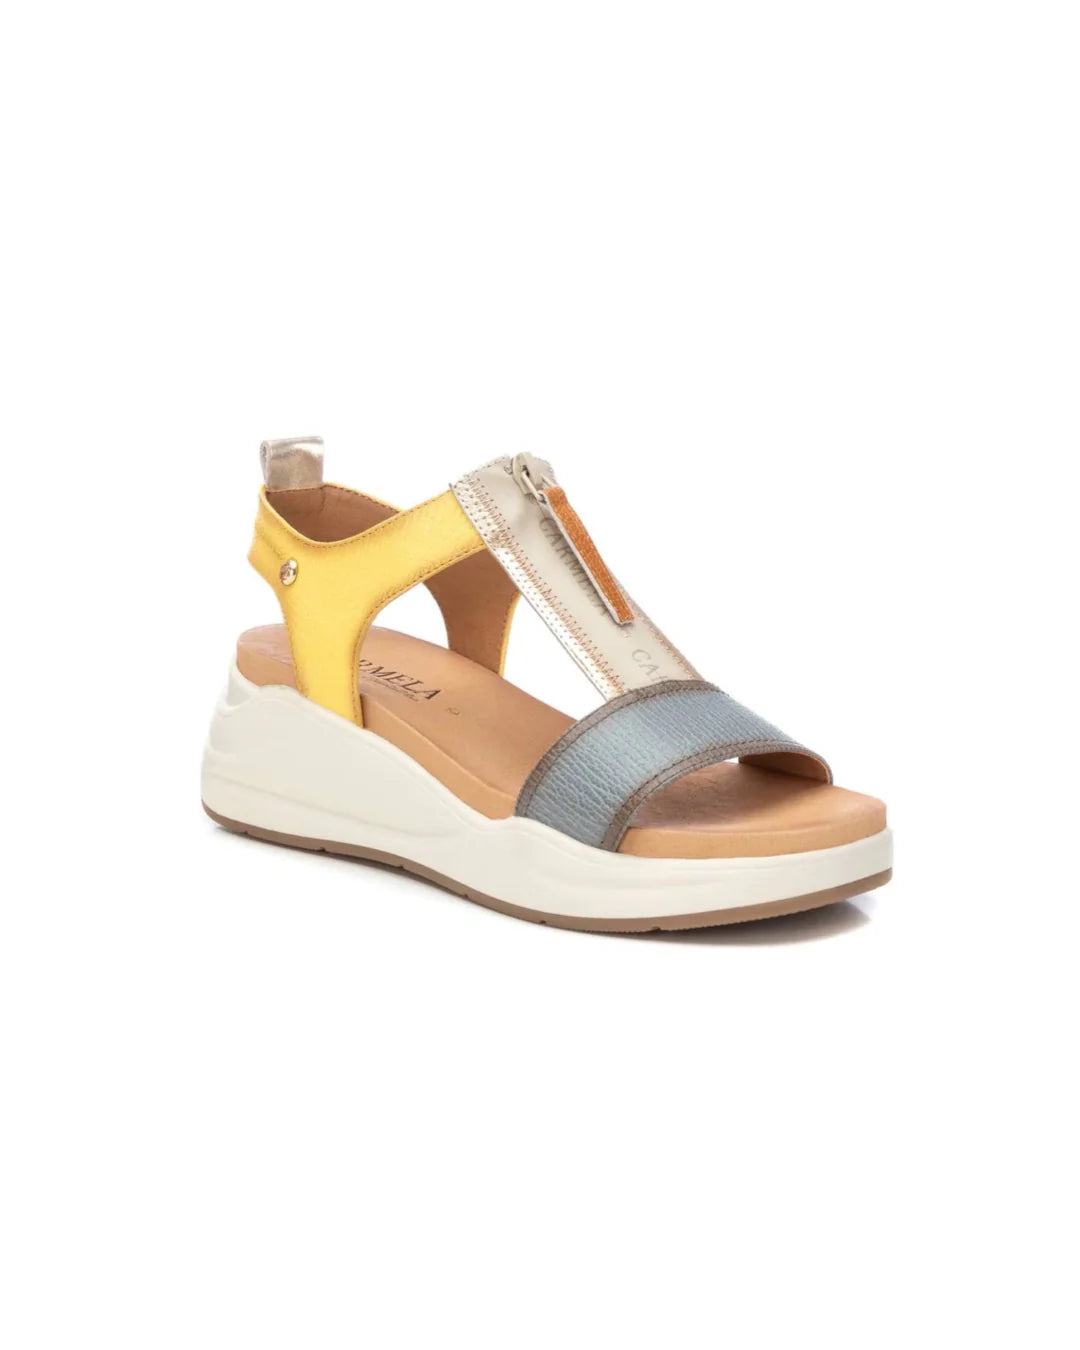 Carmela - 161550 Aqua & Yellow Leather Zip Sandal